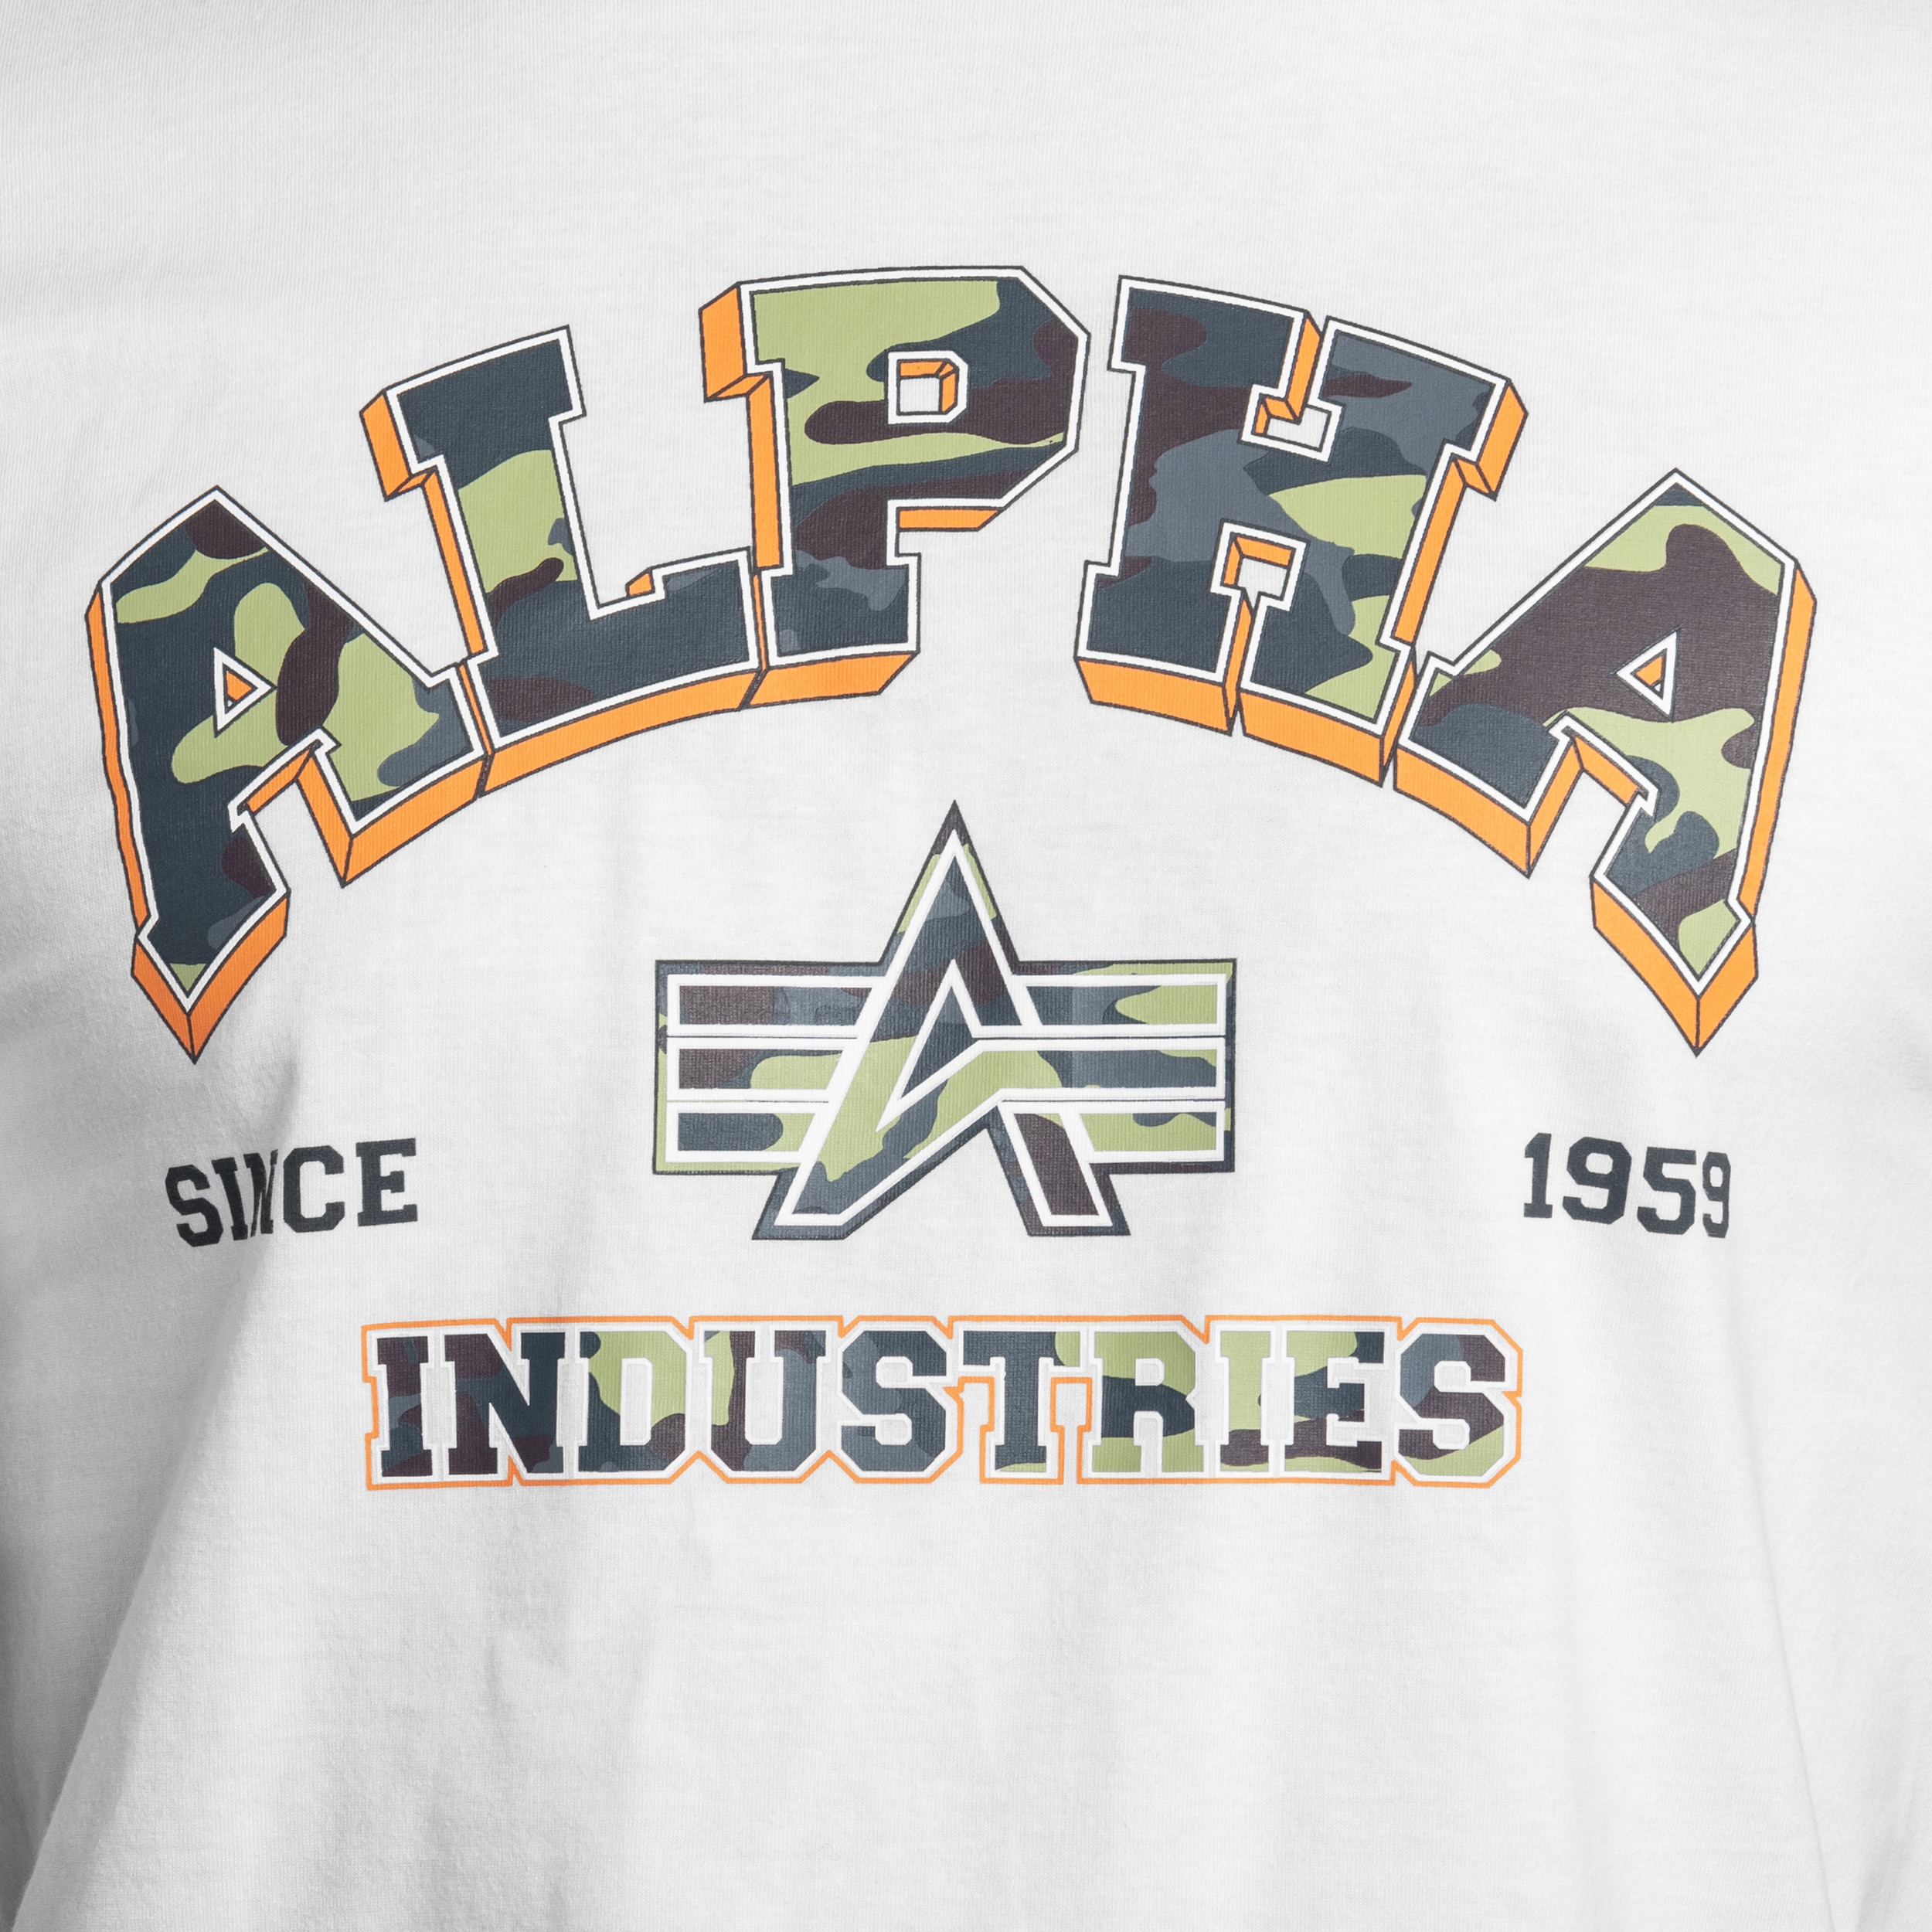 Футболка T-shirt Alpha Industries College Camo - White